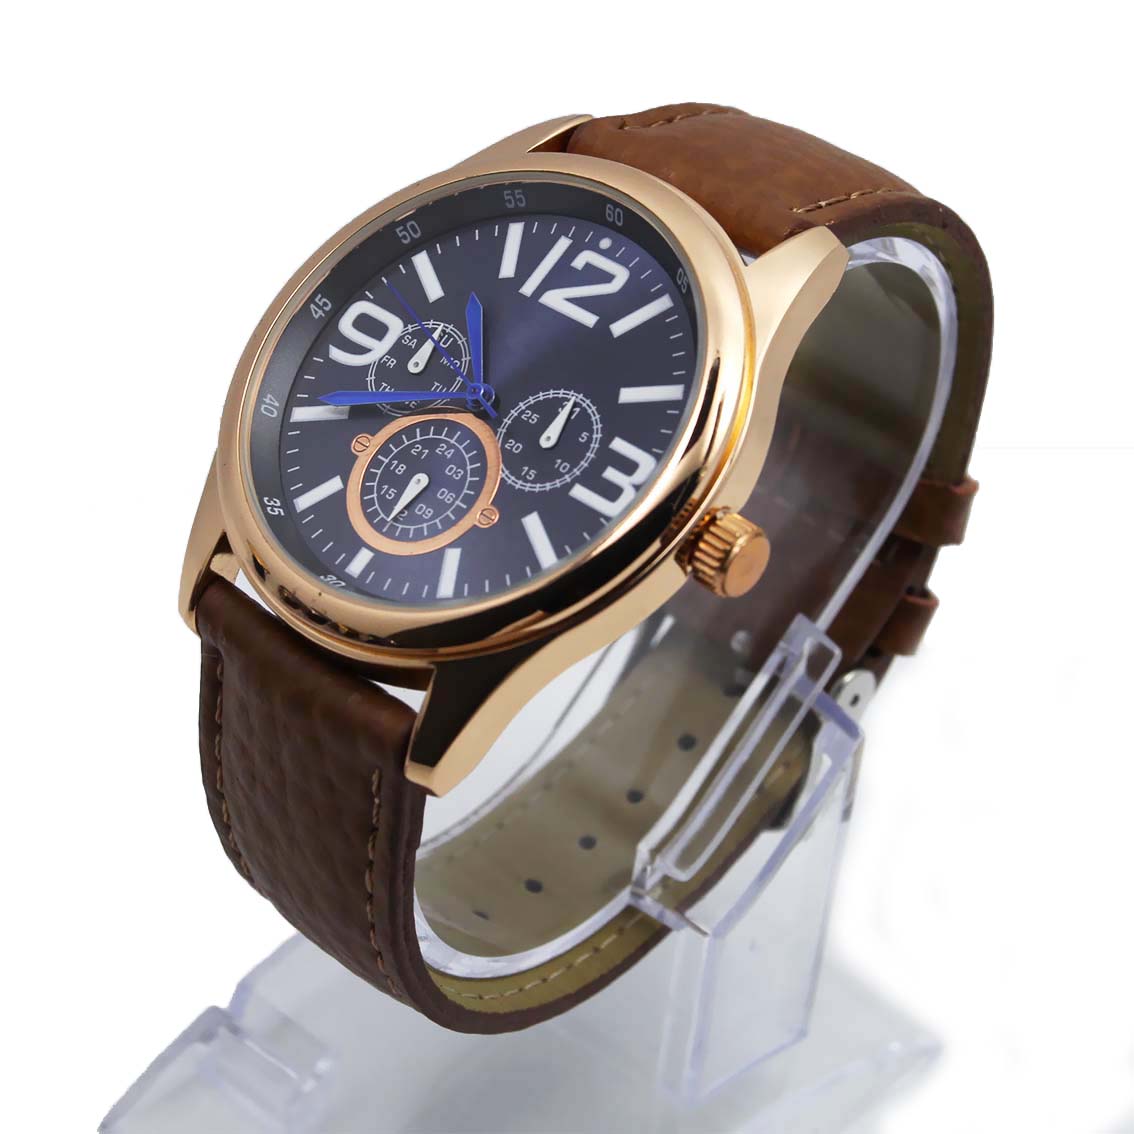 #02108Men's wristwatch quartz analog leather strap watch